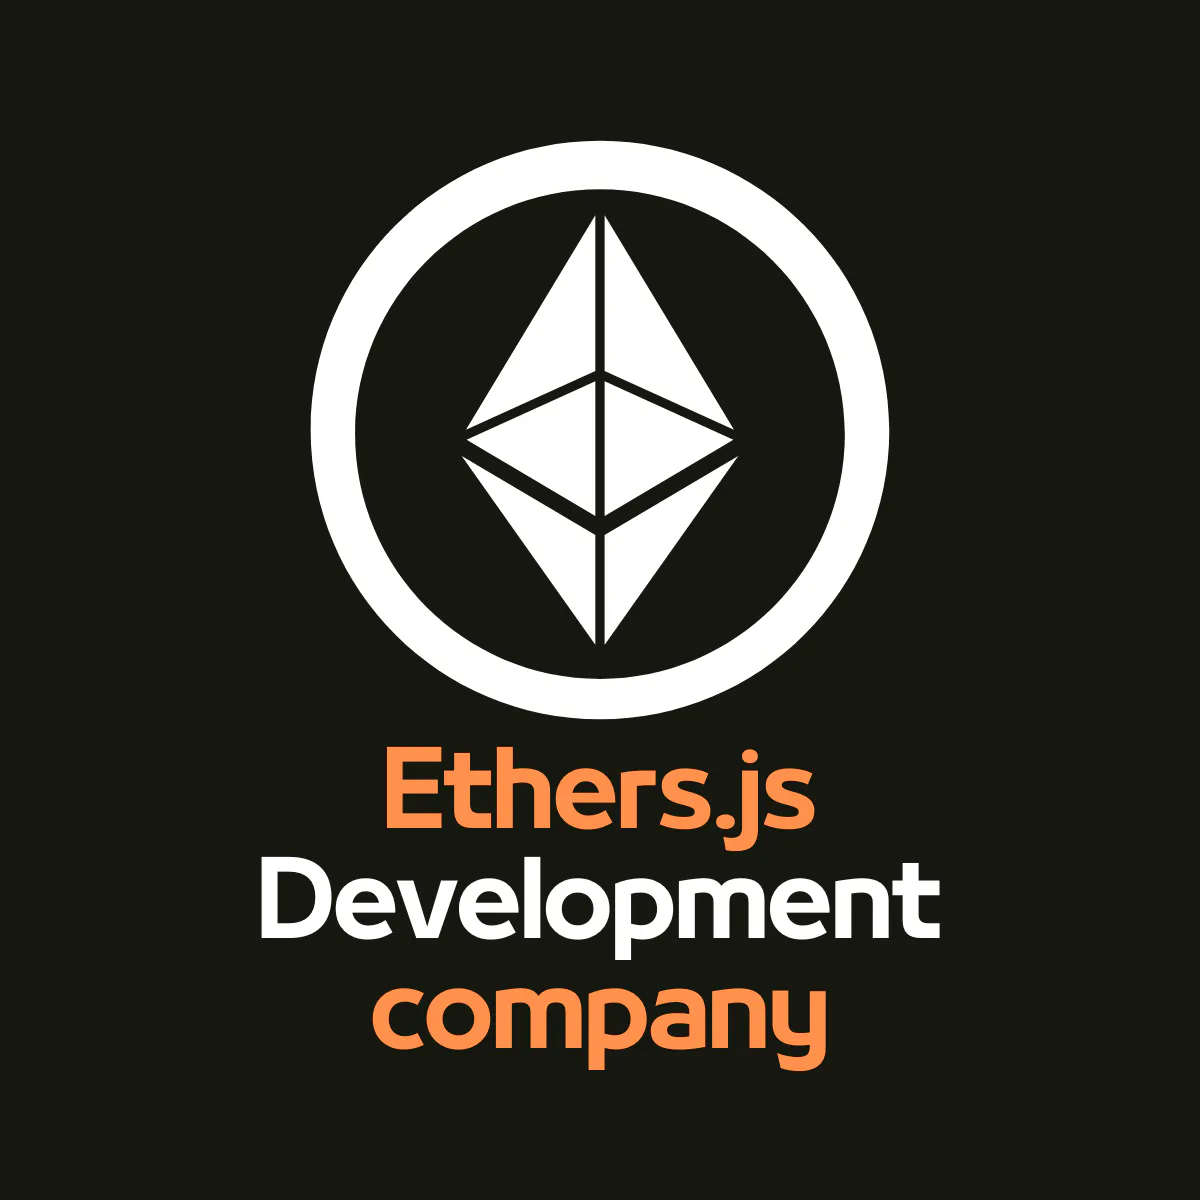 Ethers.js Development